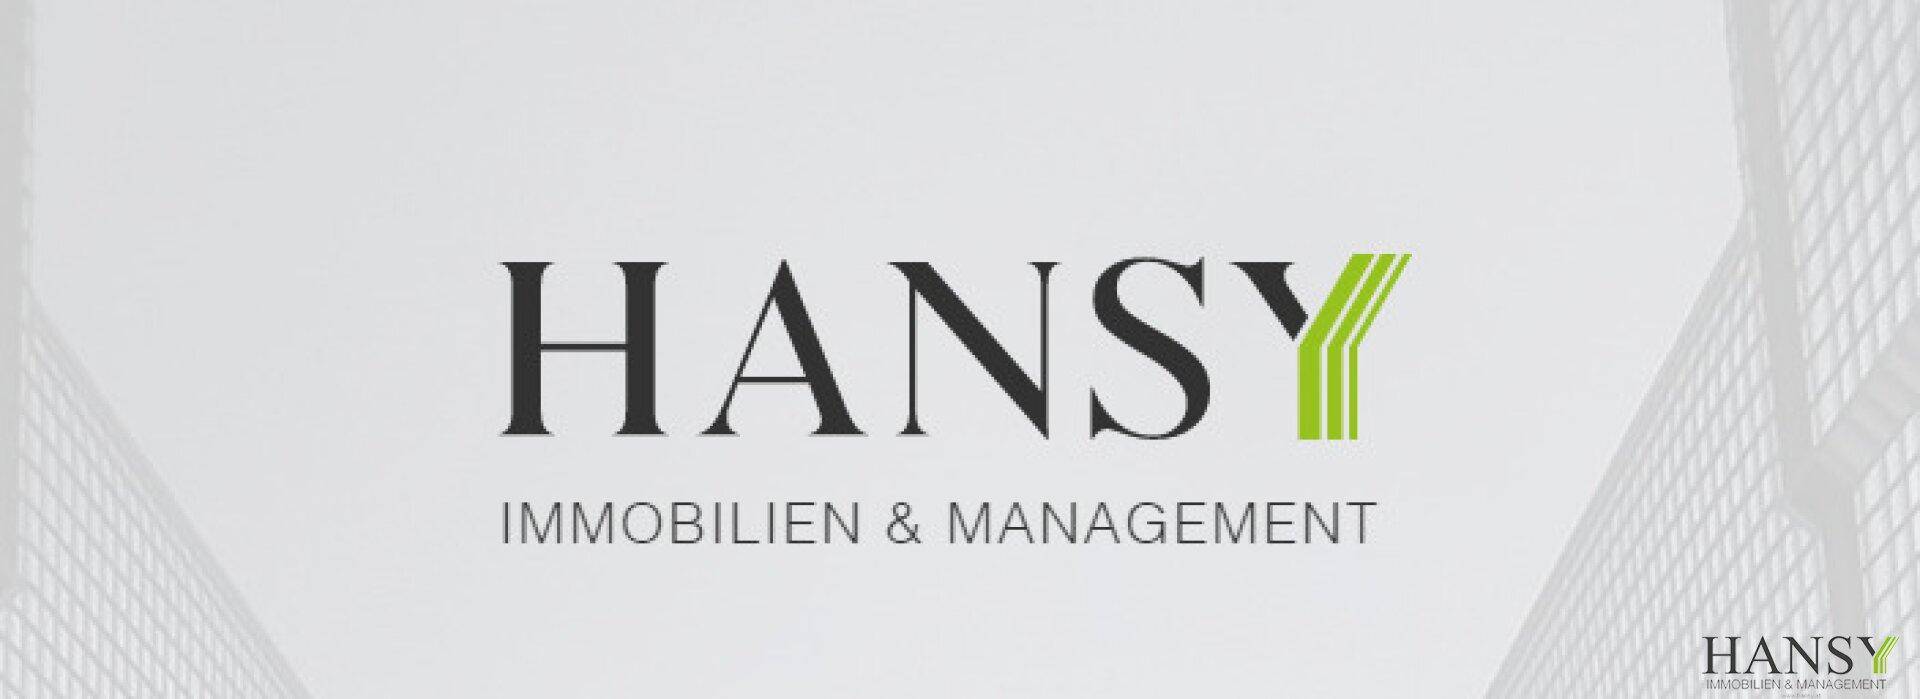 Hansy GmbH